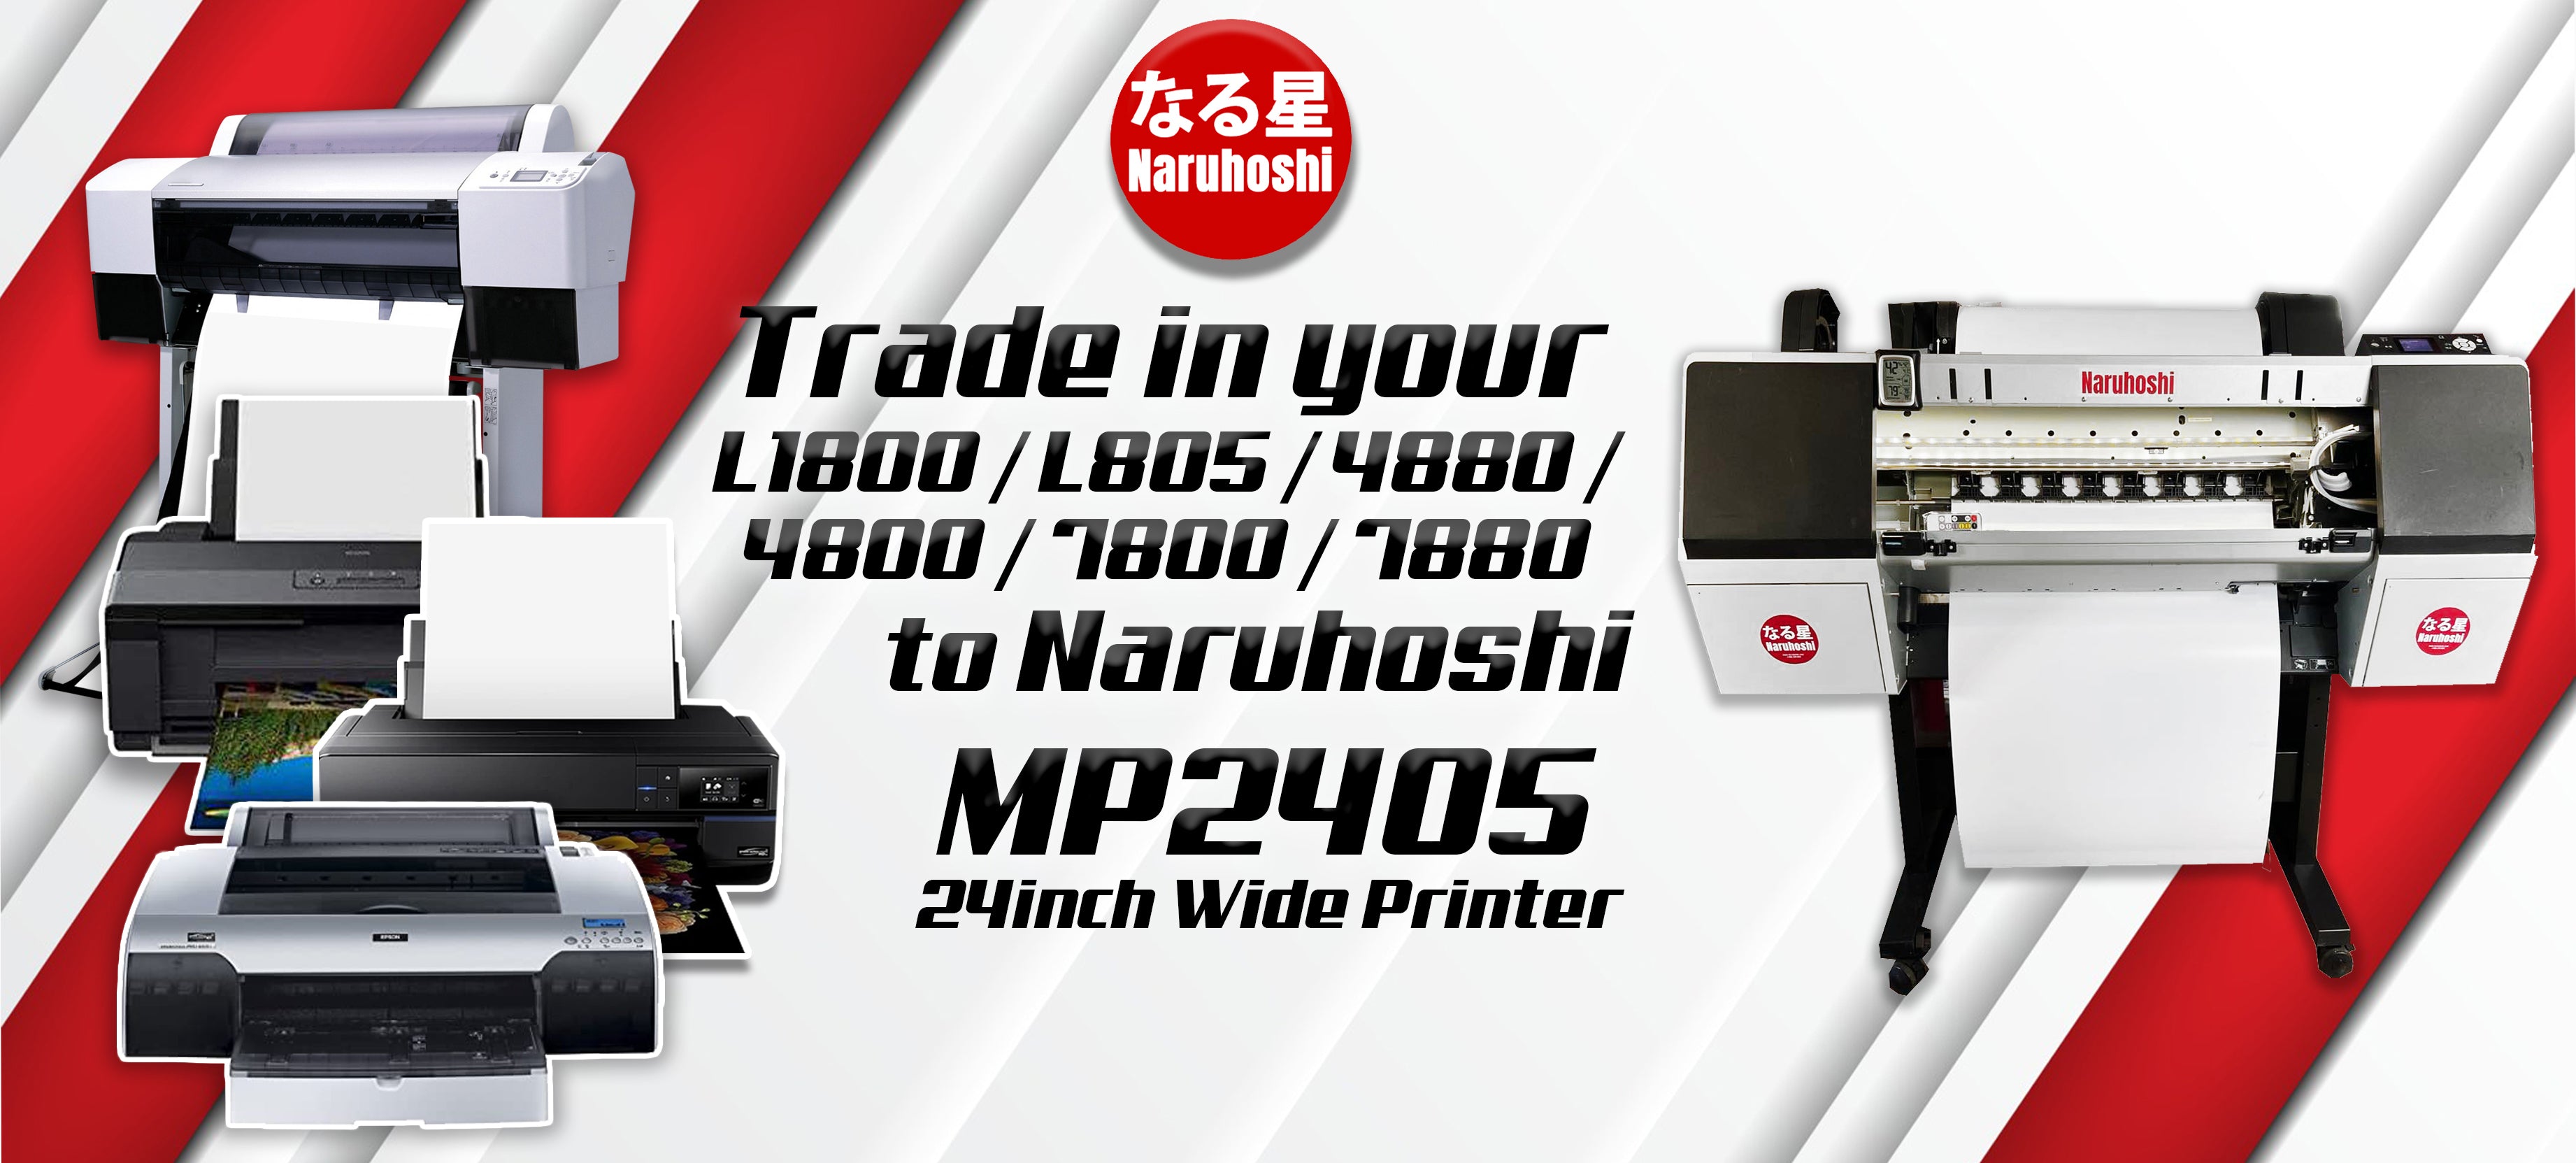 2 by 2 Promo: 2 Naruhoshi DTF 2406 Printer bundled with 2 PM2404